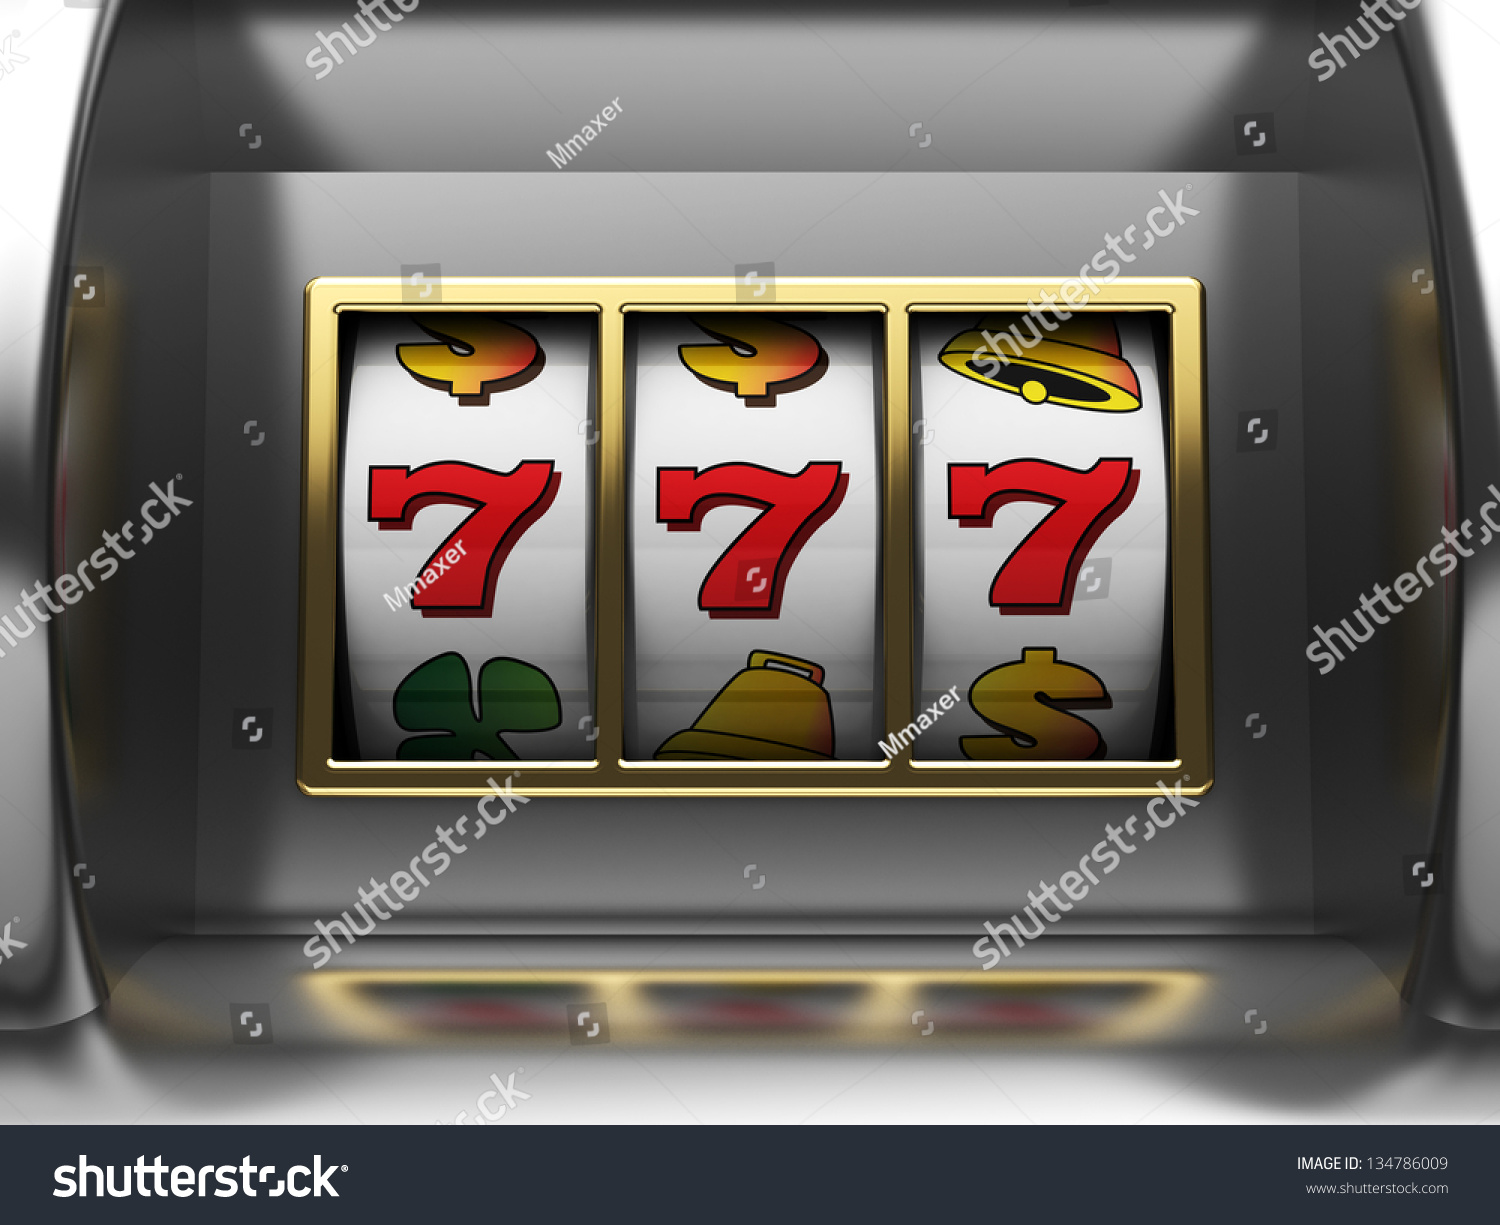 3d Illustration Of Slot Machine Jackpot - 134786009 : Shutterstock